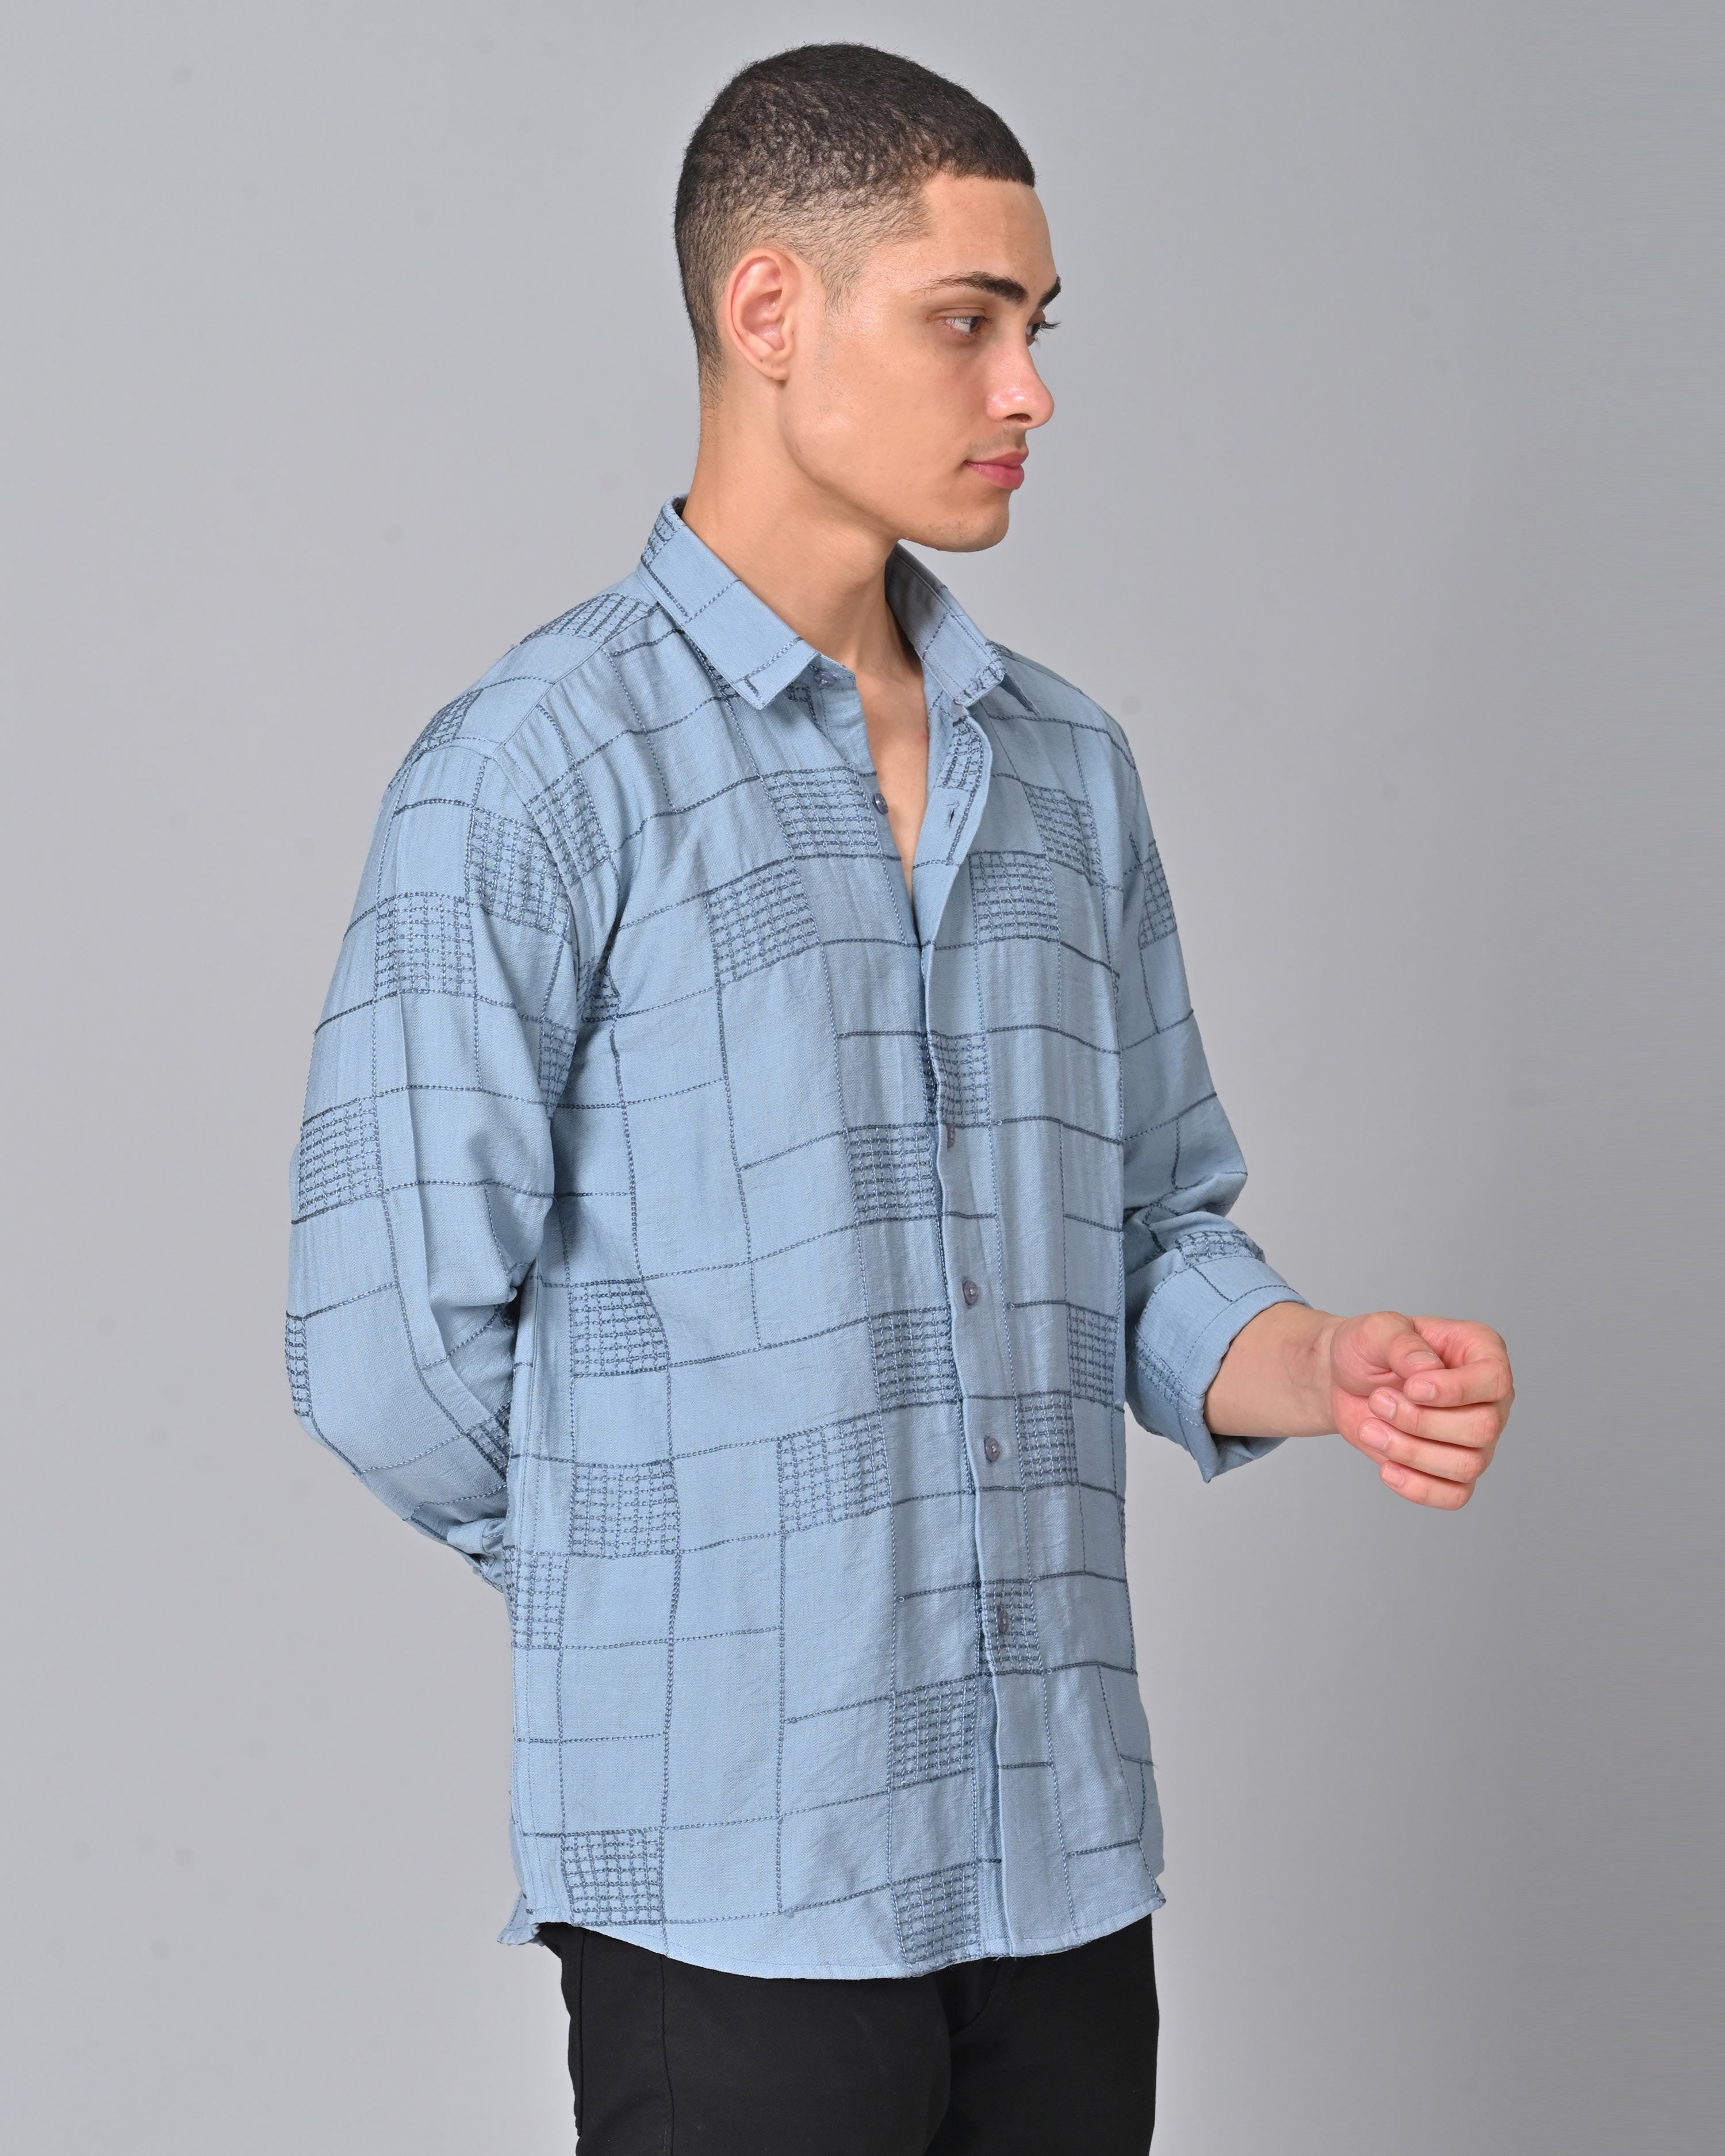 Buy Men's Embroidered Slate Blue Shirt Online